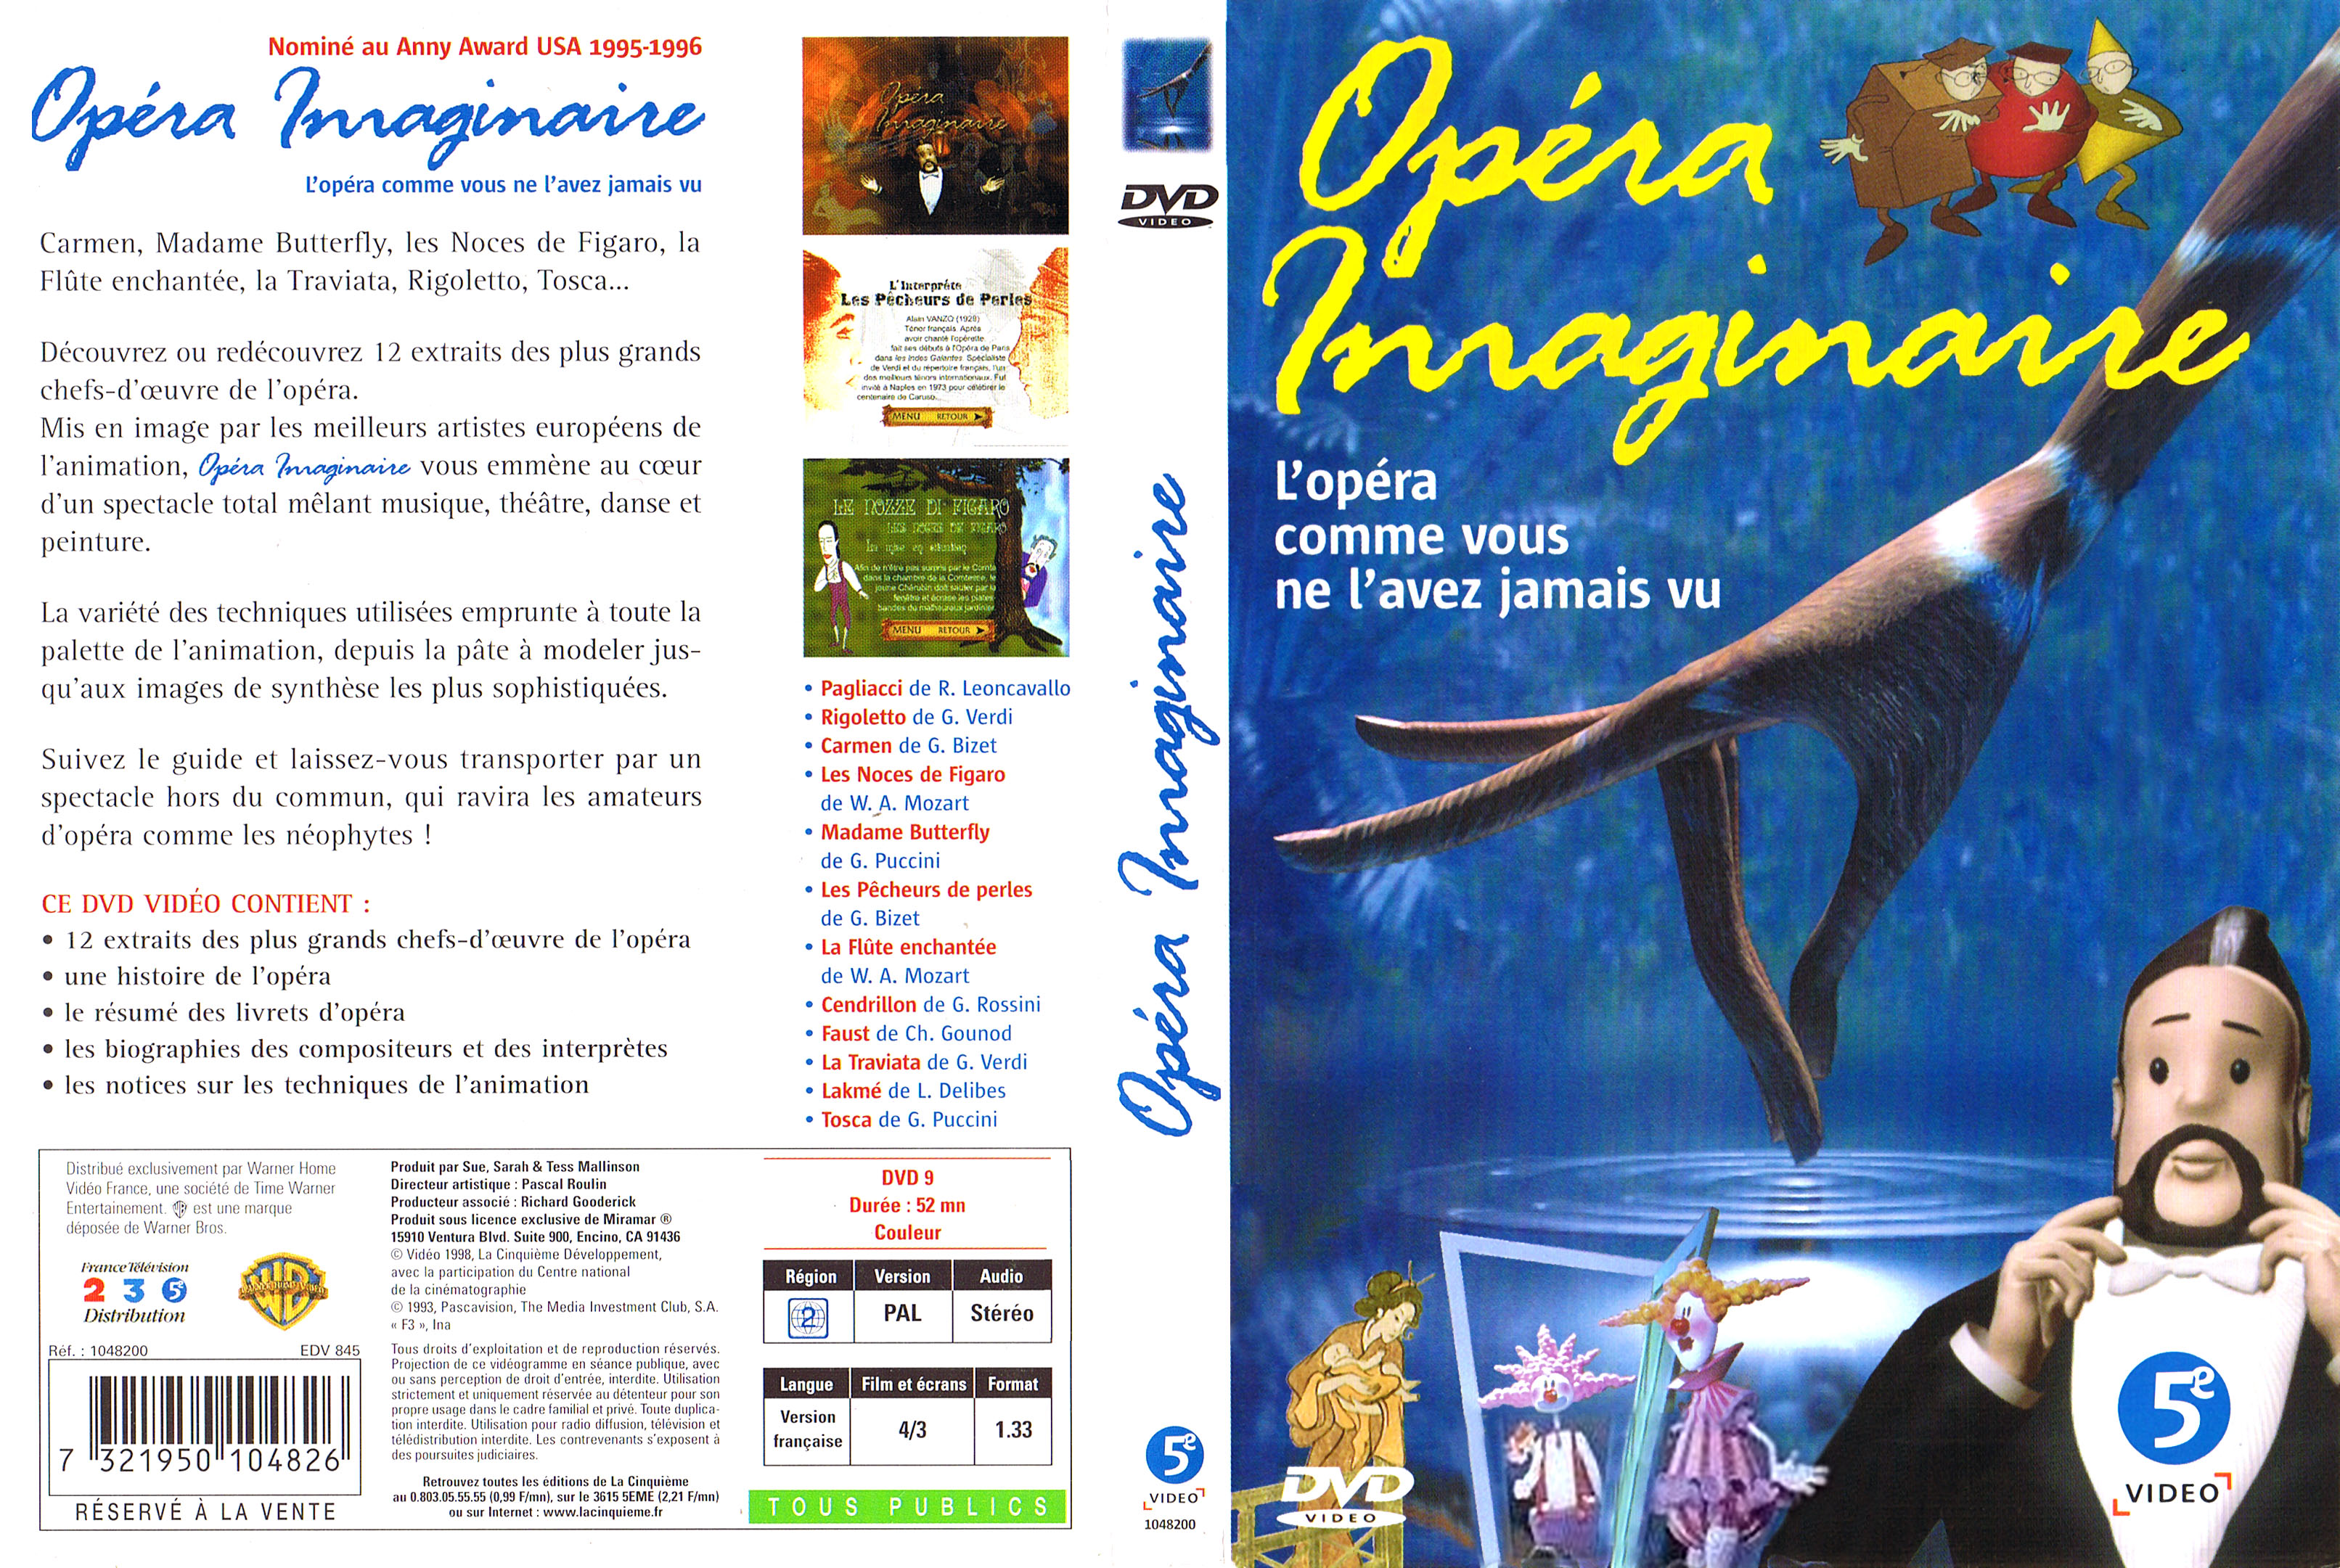 Jaquette DVD Opra imaginaire